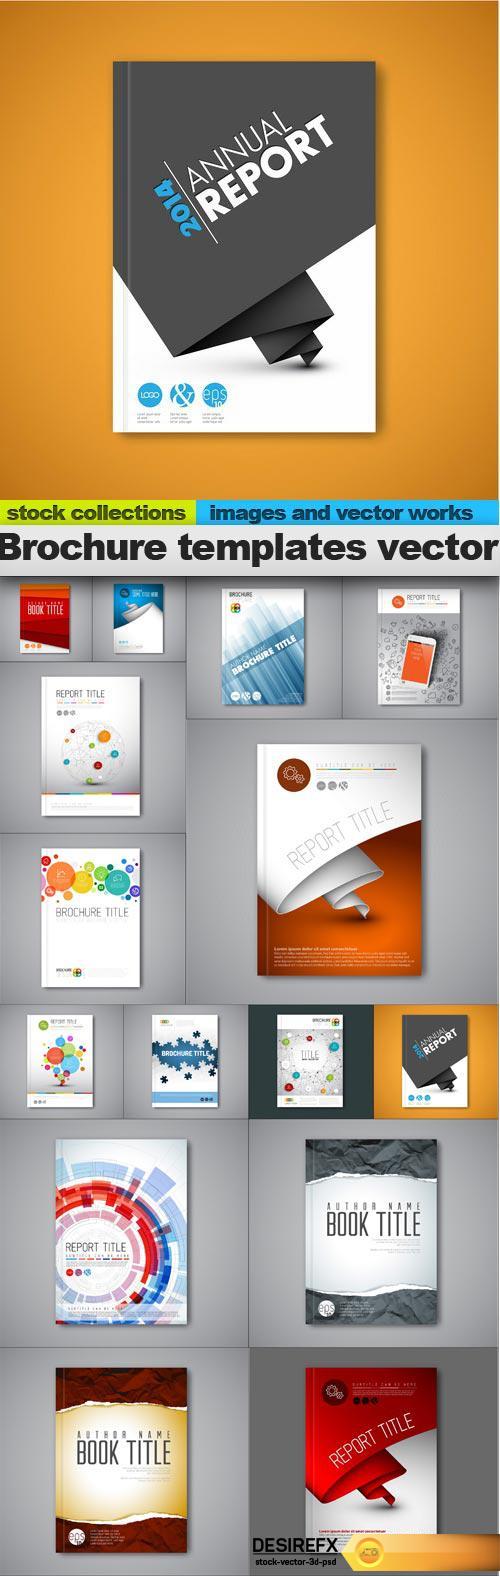 Brochure templates vector, 15 x EPS